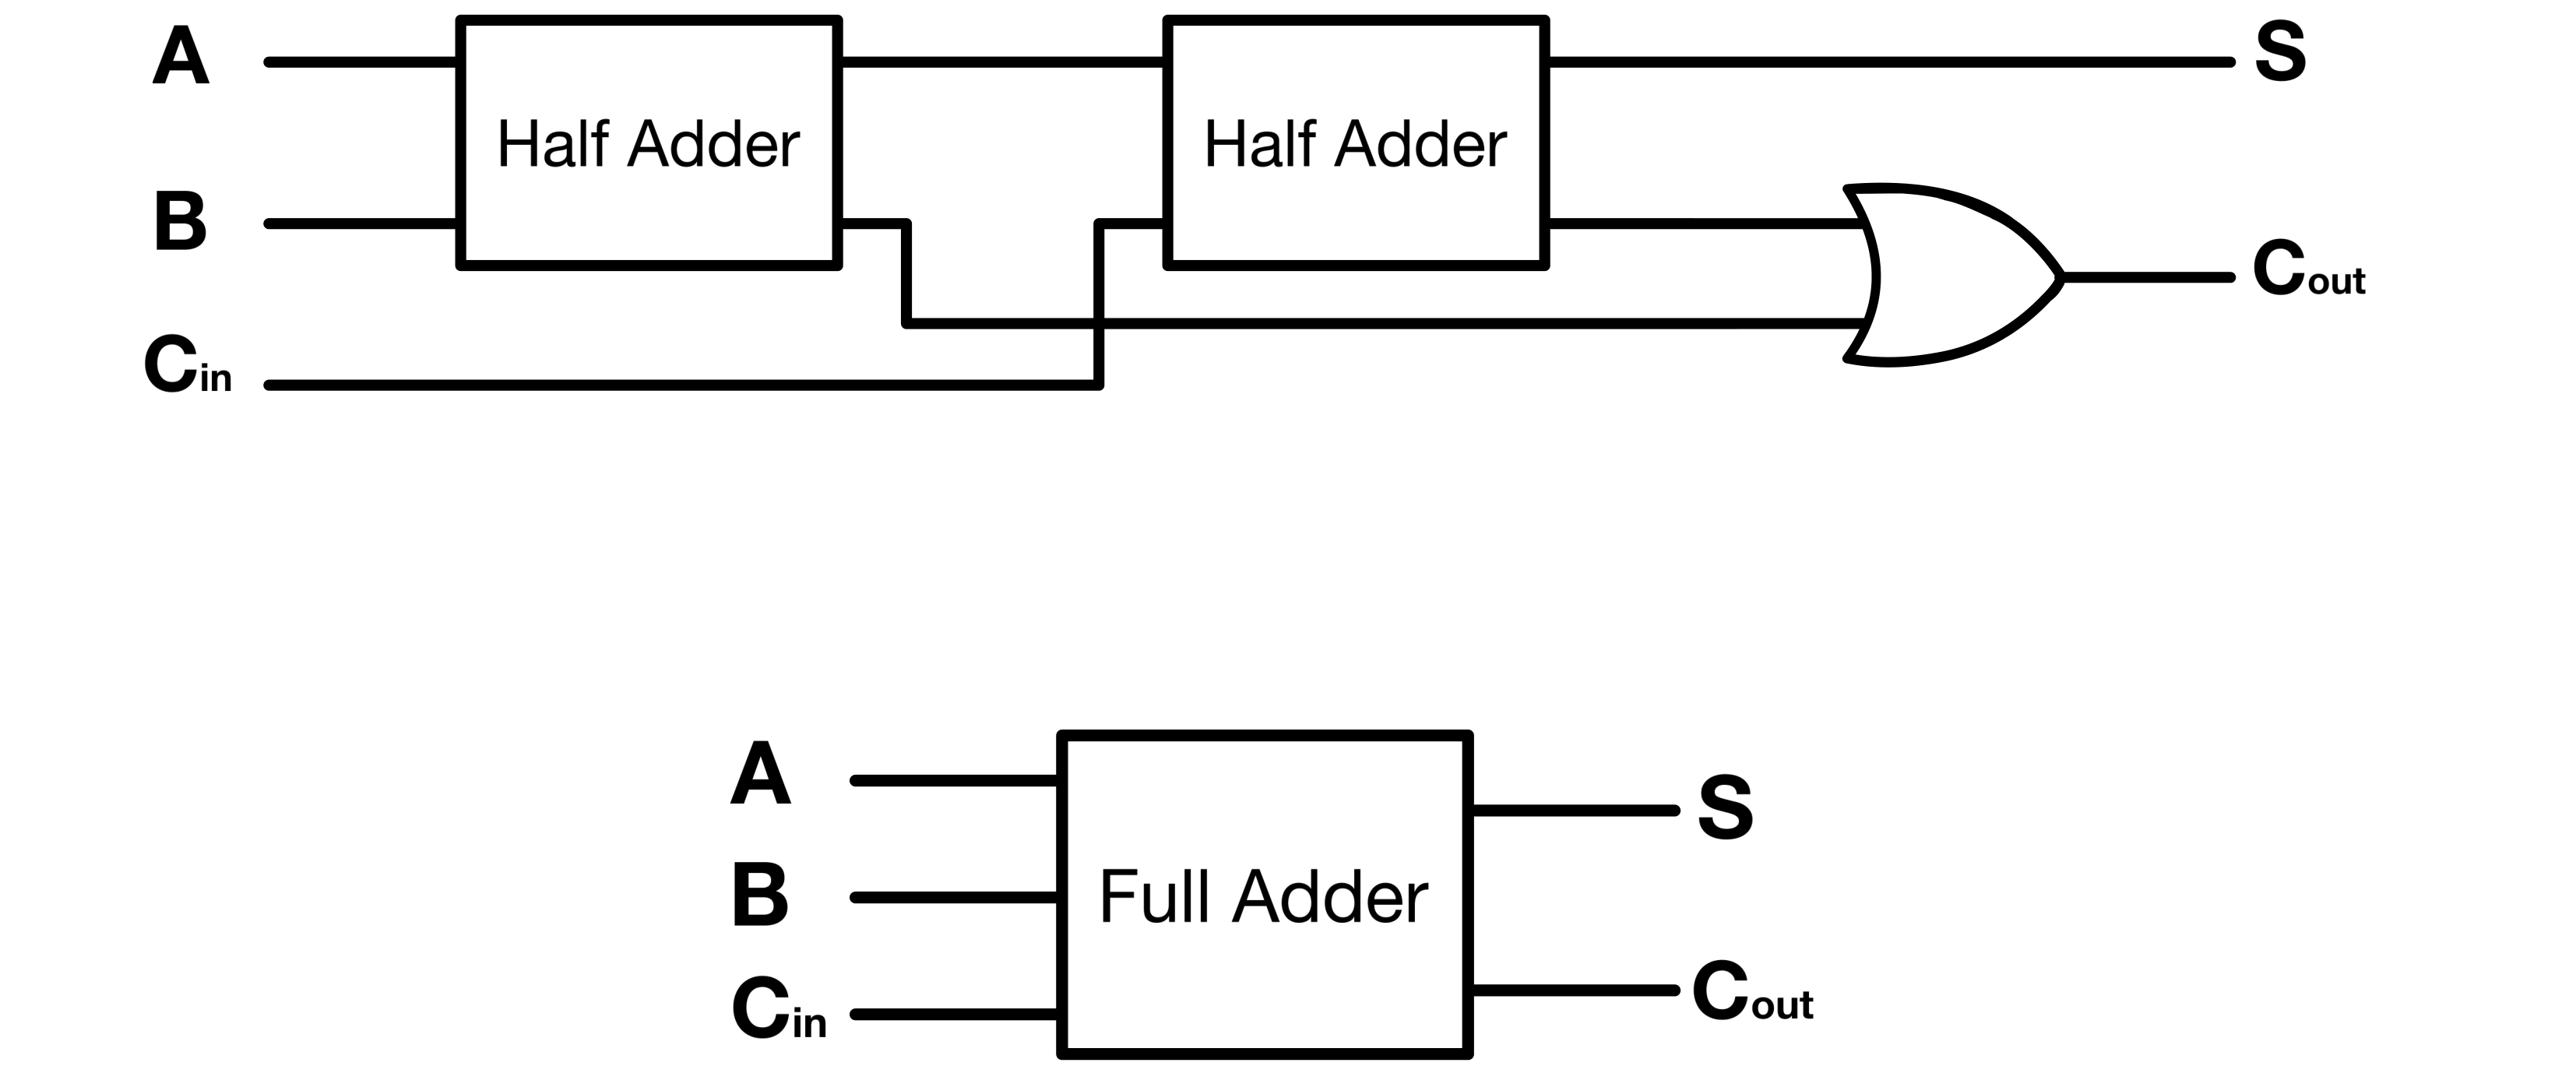 Figure 3: Full-adder- Block diagram using two Half-adders